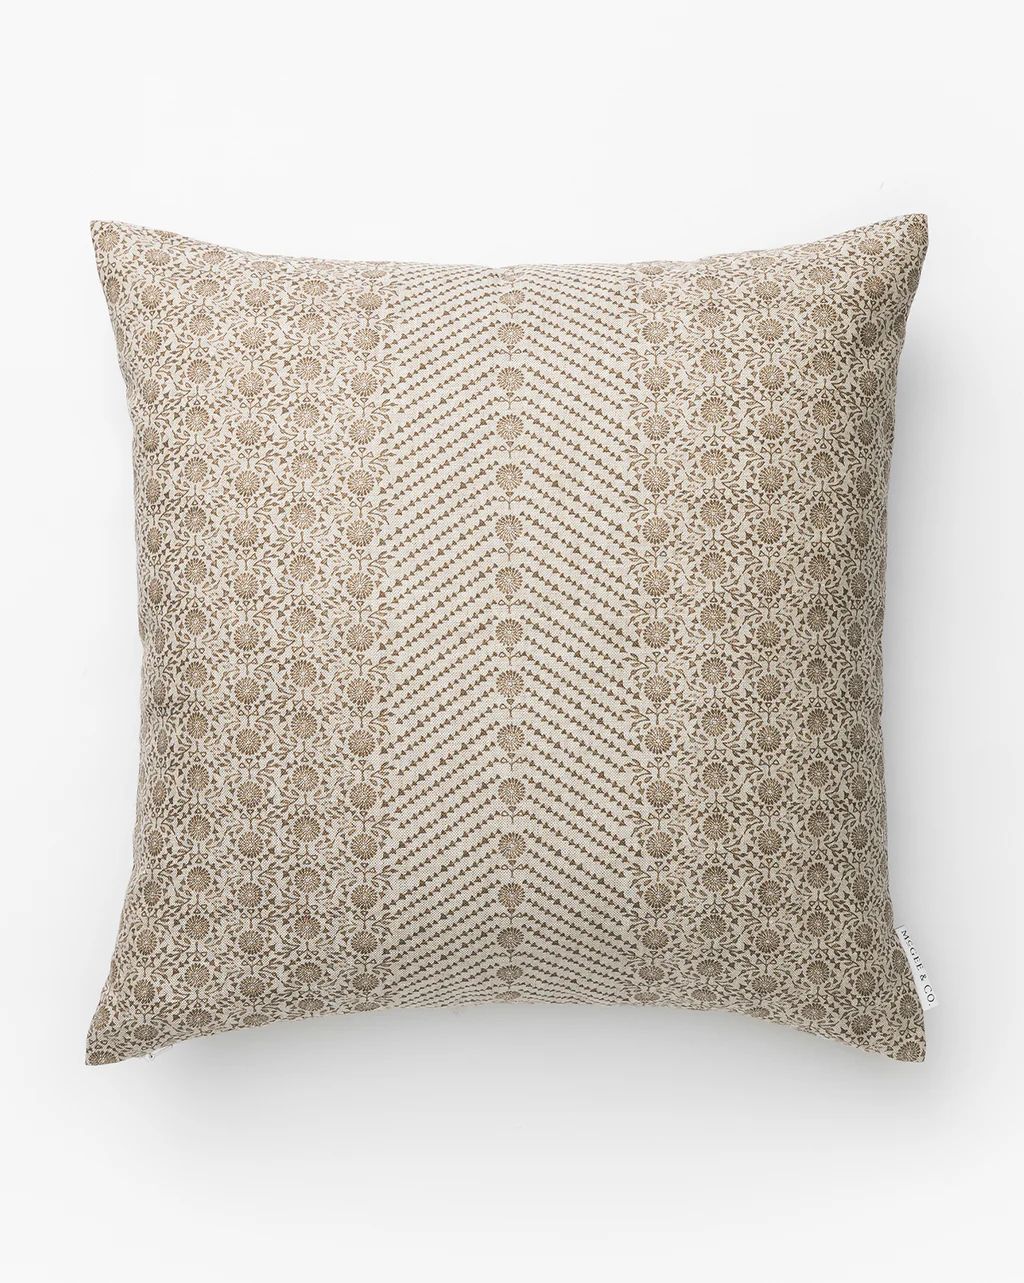 Dorrit Pillow Cover | McGee & Co.